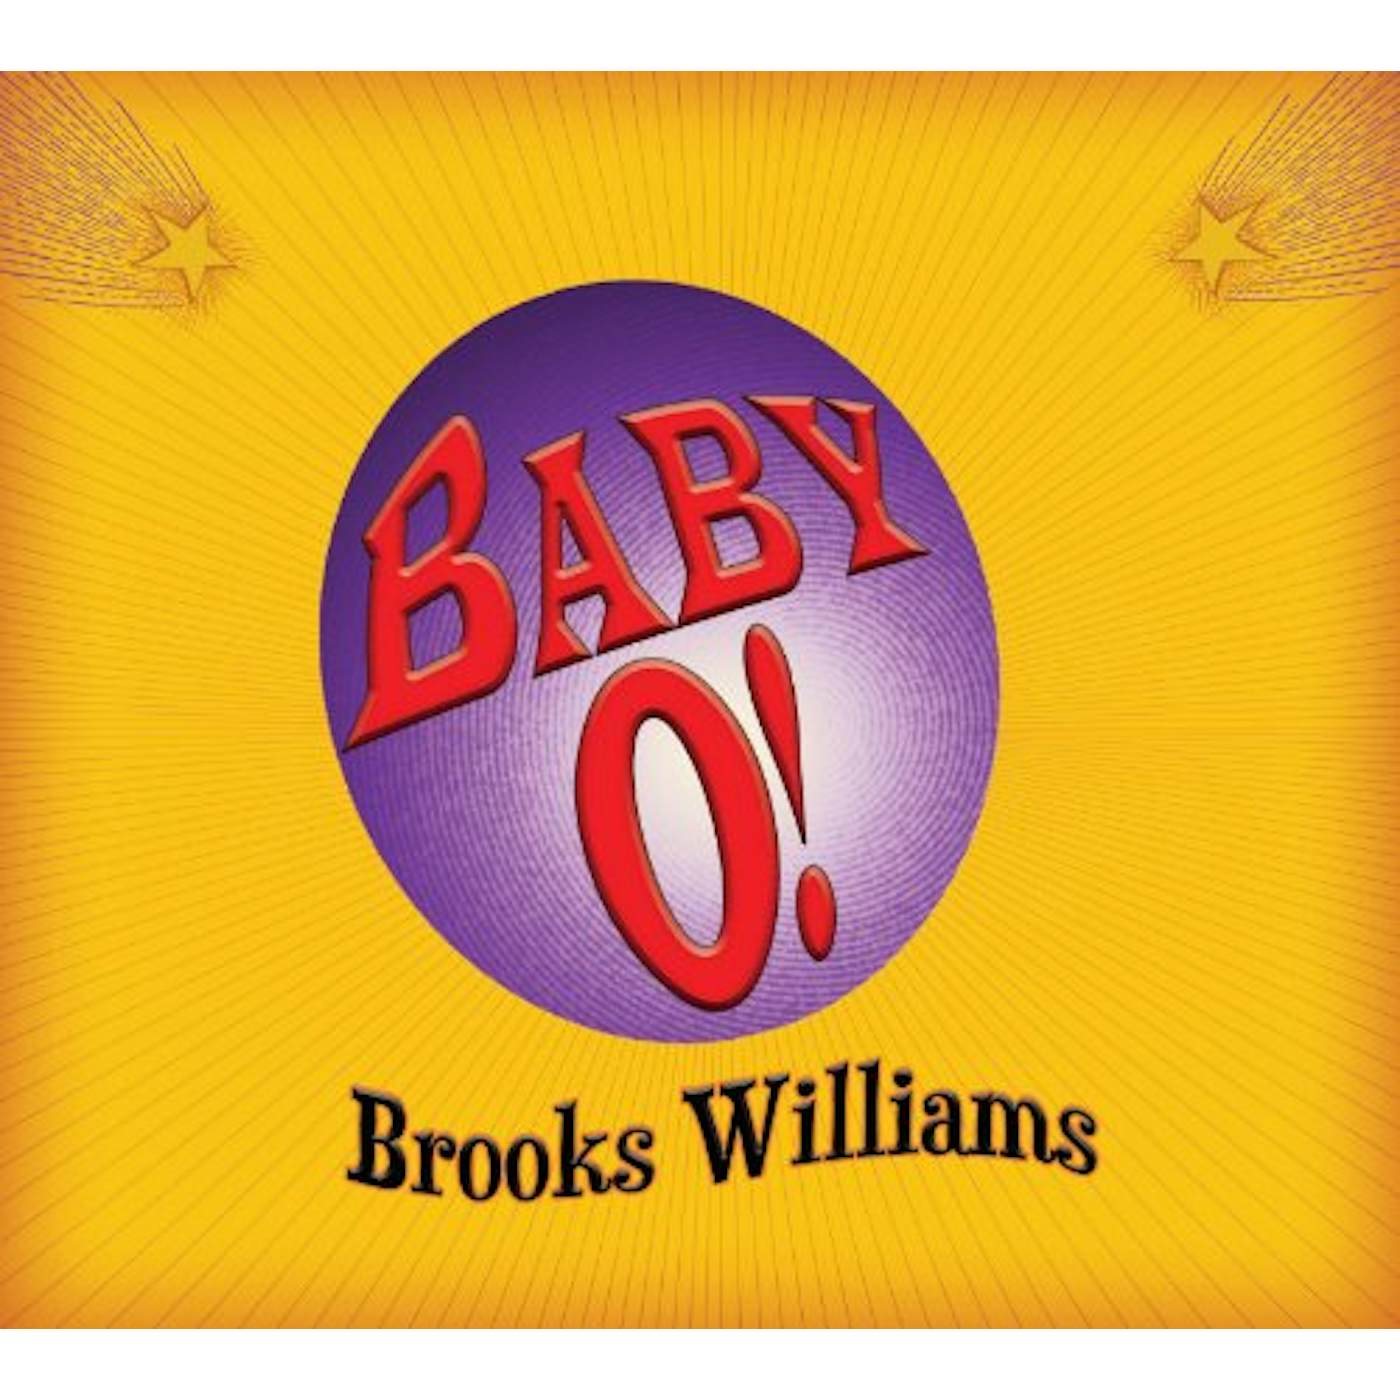 Brooks Williams BABY O CD